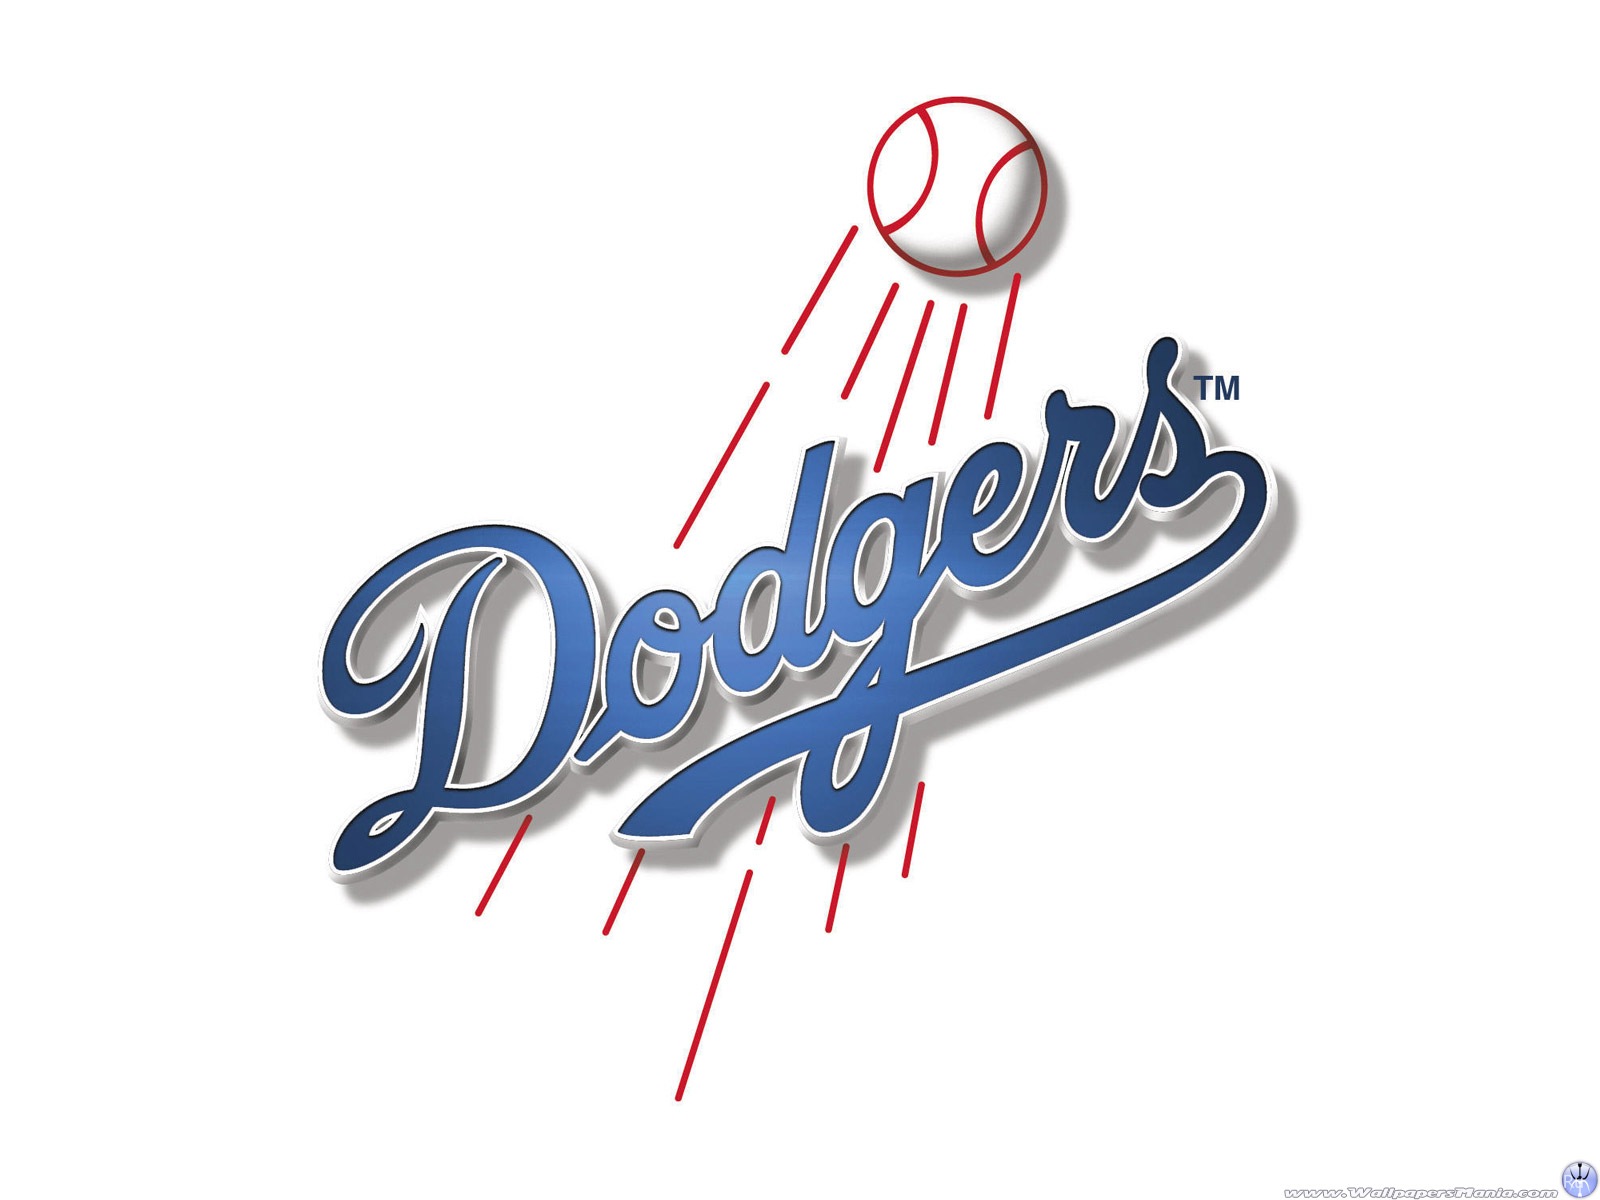 Los Angeles Dodgers News